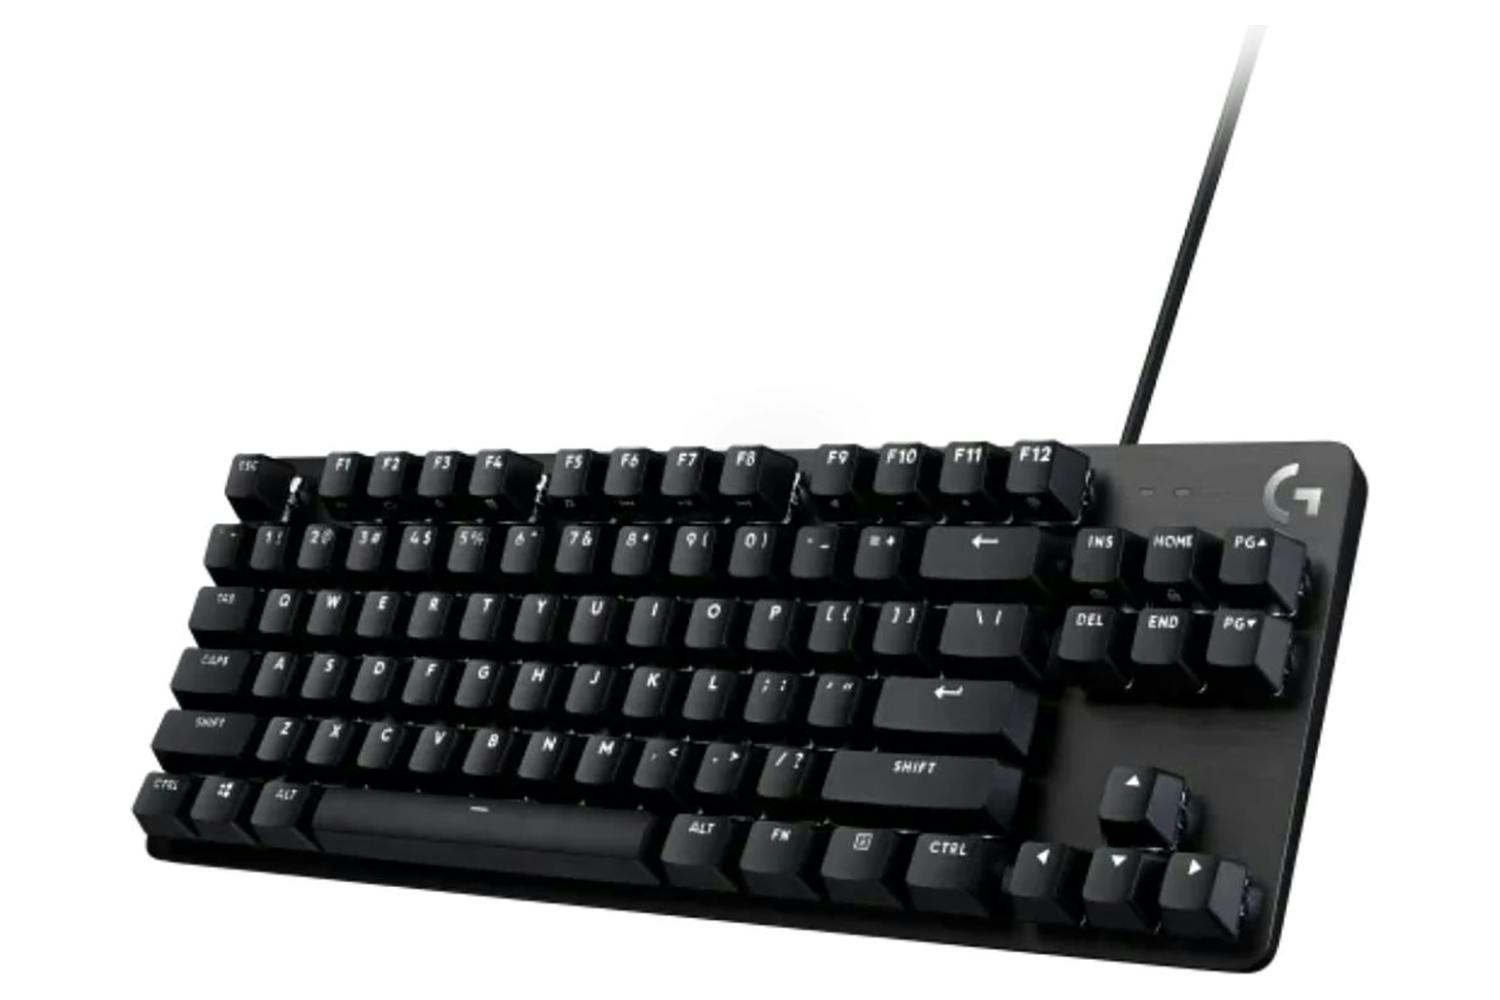 Logitech G413 TKL SE Mechanical Gaming Keyboard